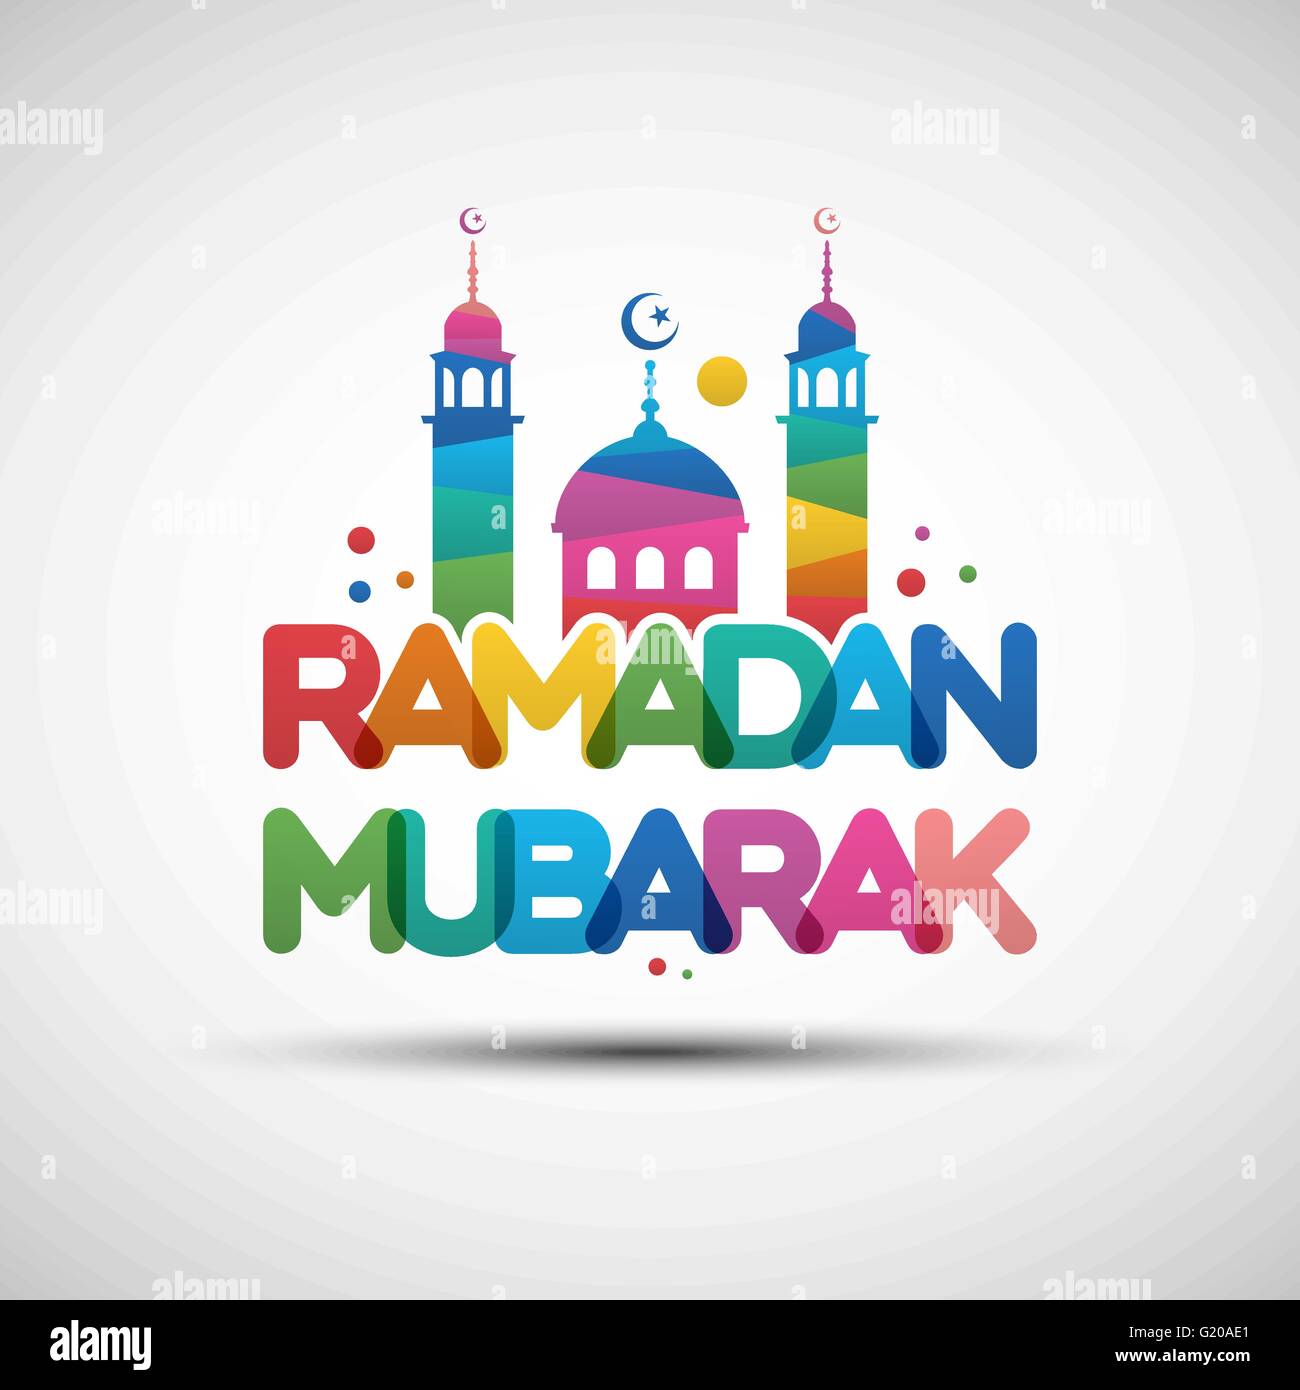 Vector Illustration of Ramadan Mubarak. Greeting card 